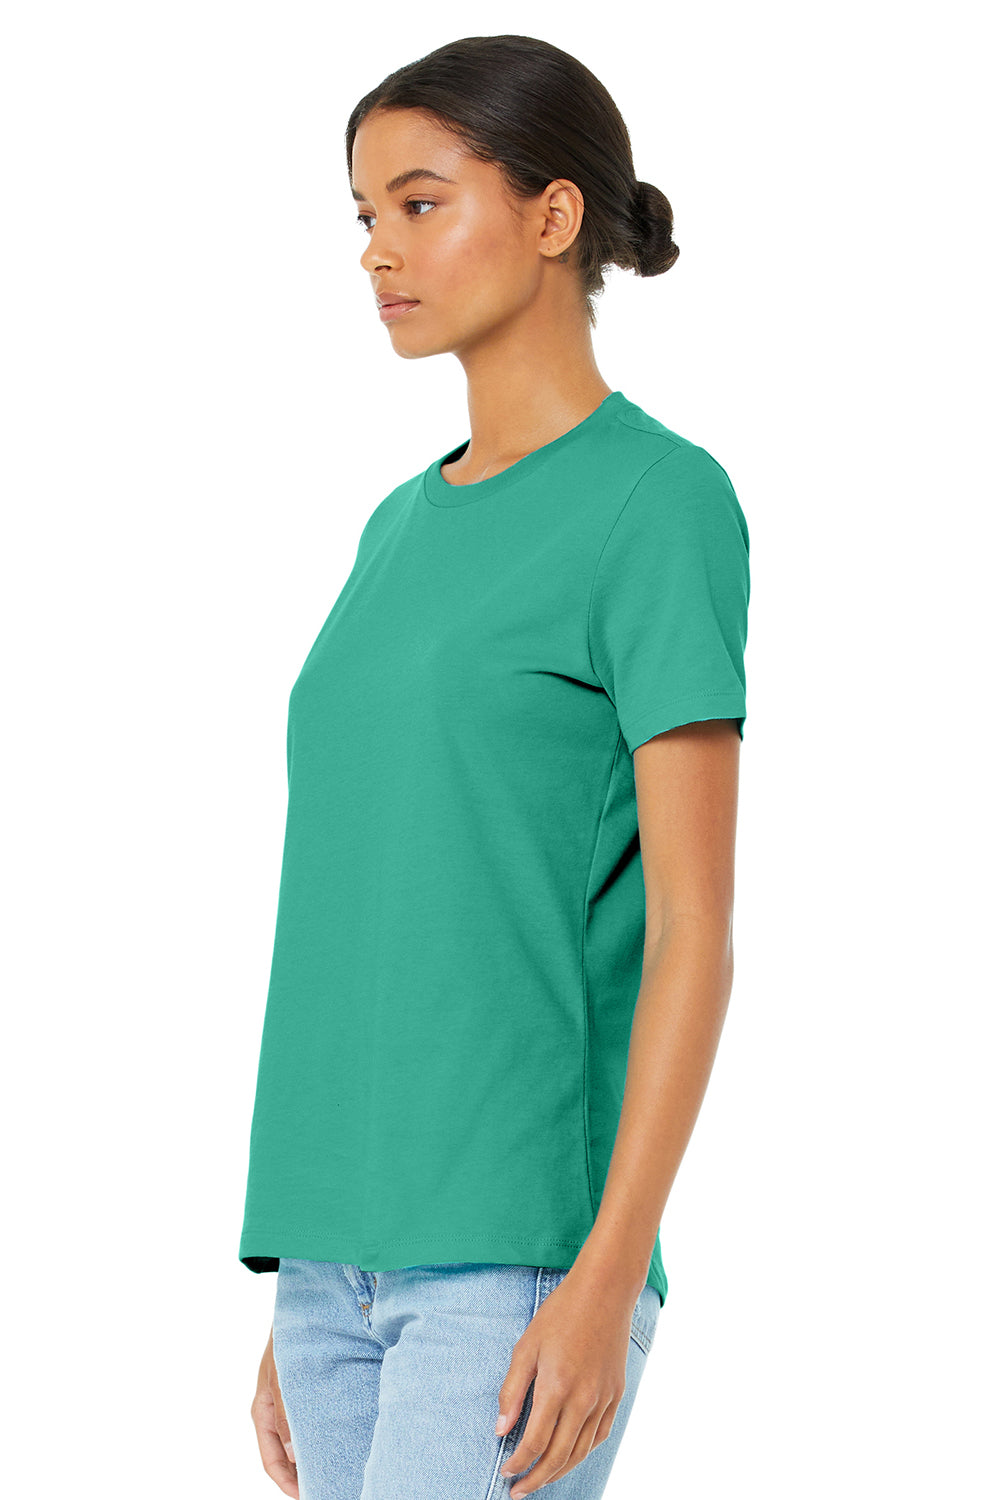 Bella + Canvas BC6400/B6400/6400 Womens Relaxed Jersey Short Sleeve Crewneck T-Shirt Teal Green Model 3Q